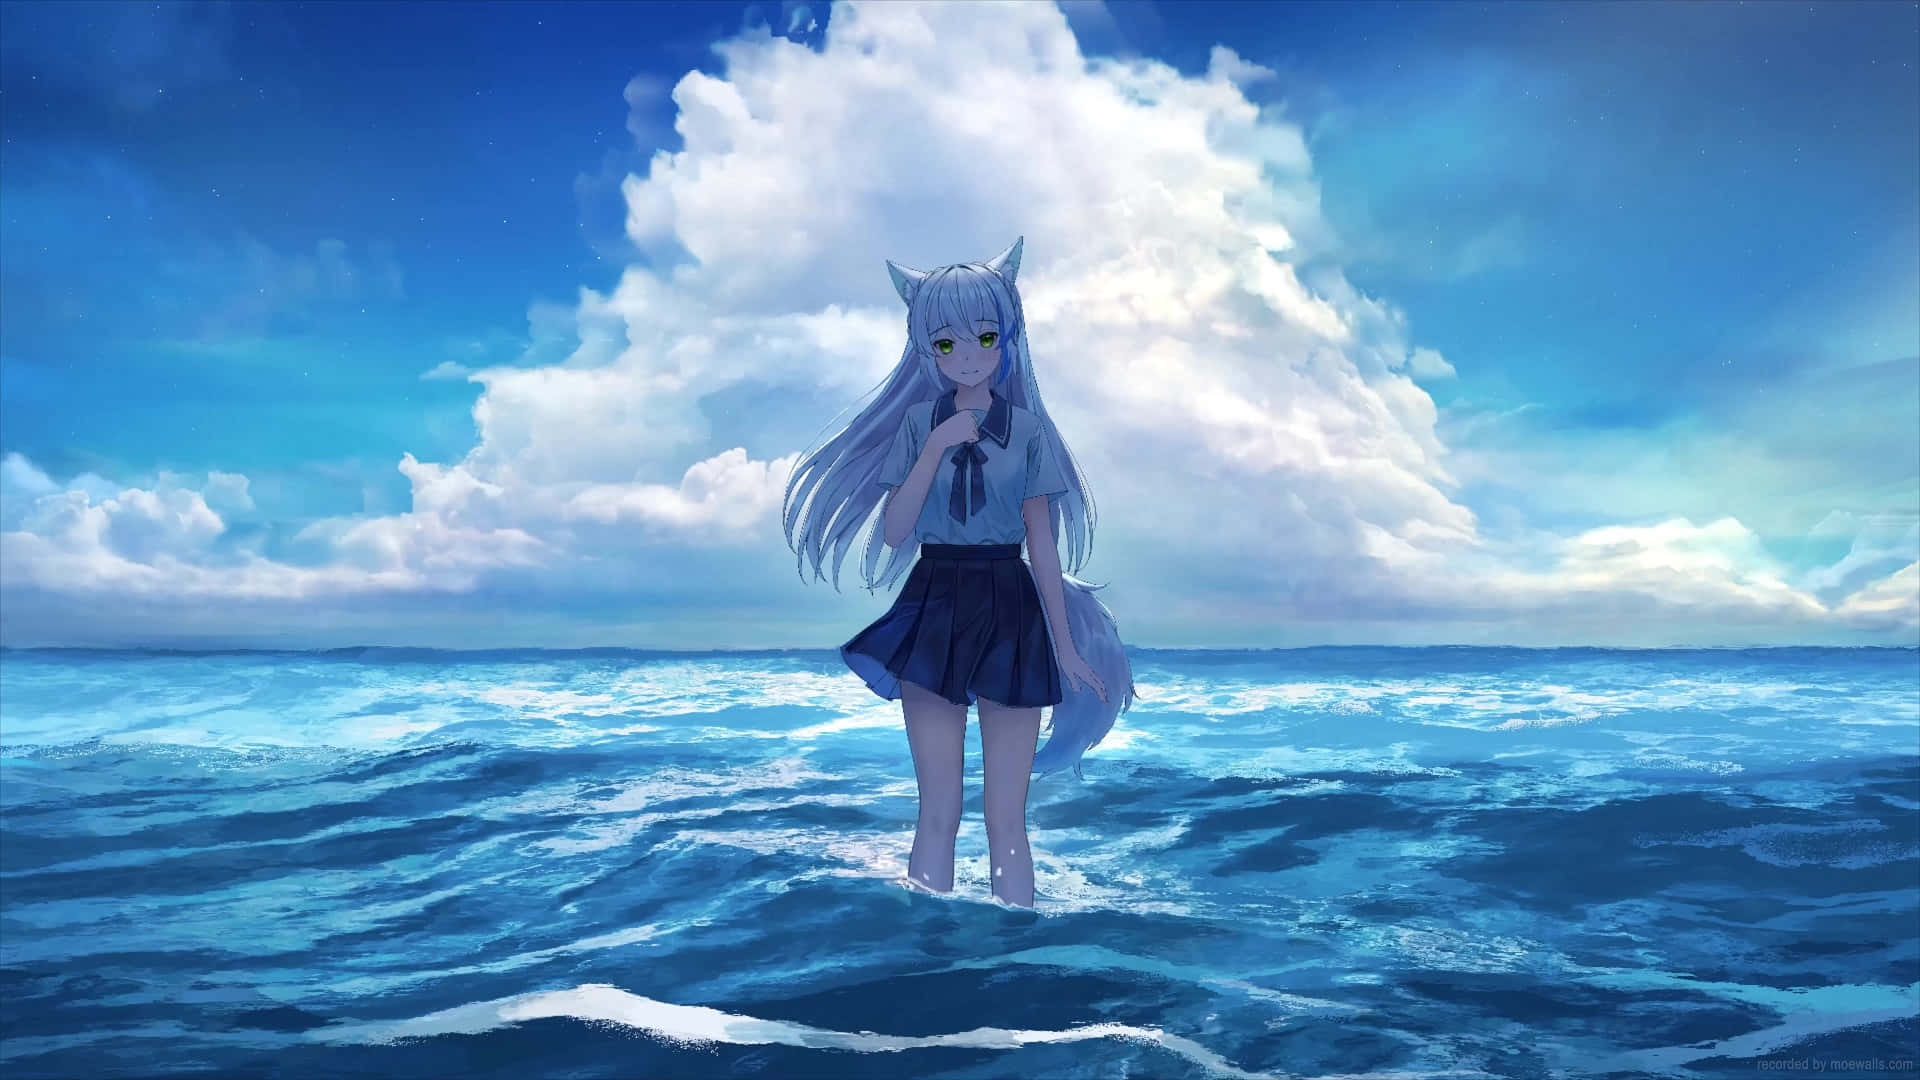 Anime Fox Girl At Sea Wallpaper